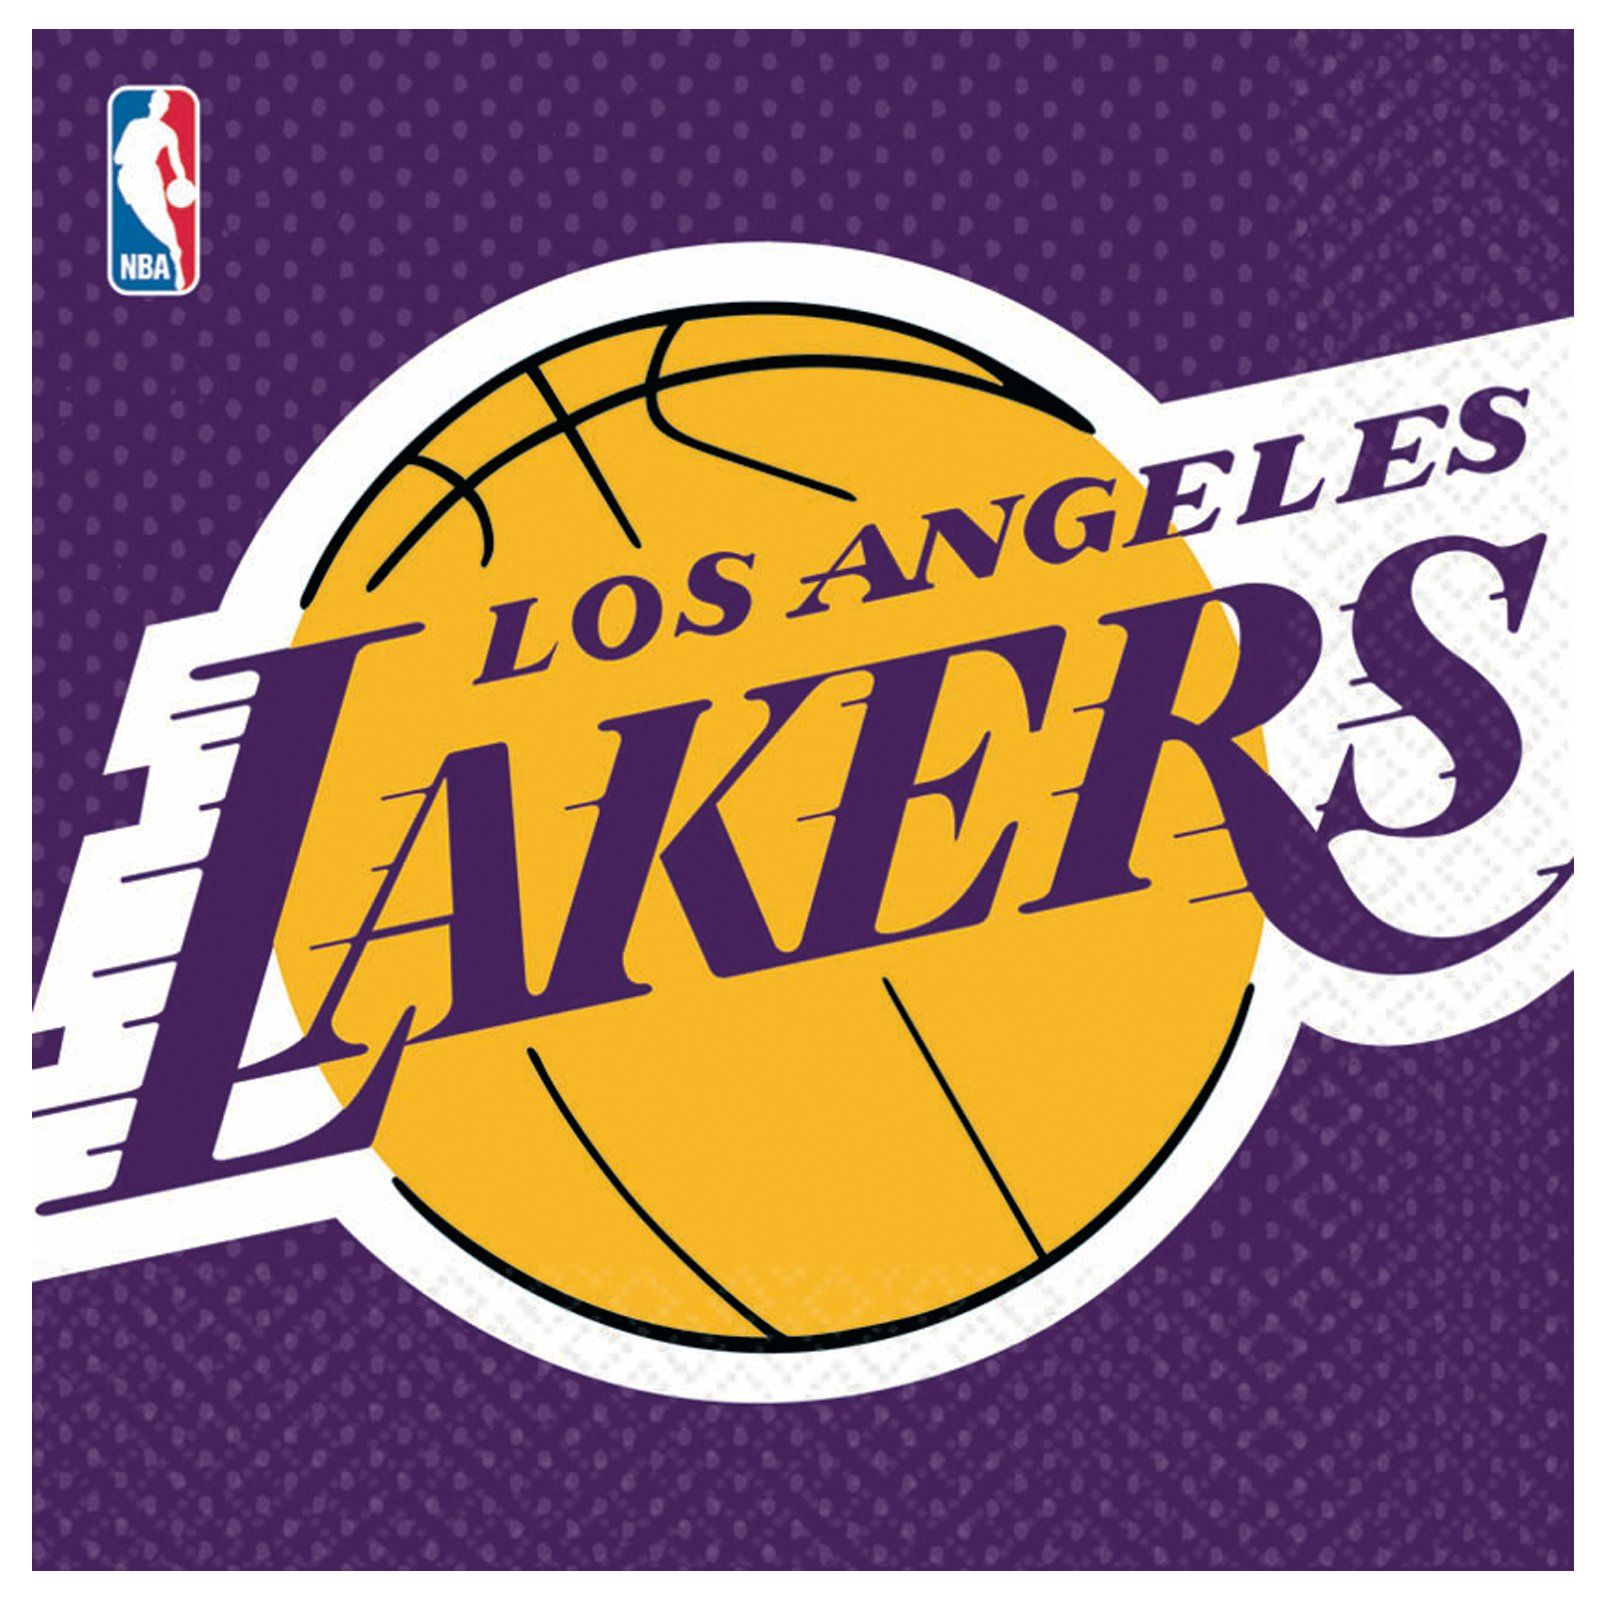 Los Angeles Lakers wallpaper, Sports, HQ Los Angeles Lakers pictureK Wallpaper 2019